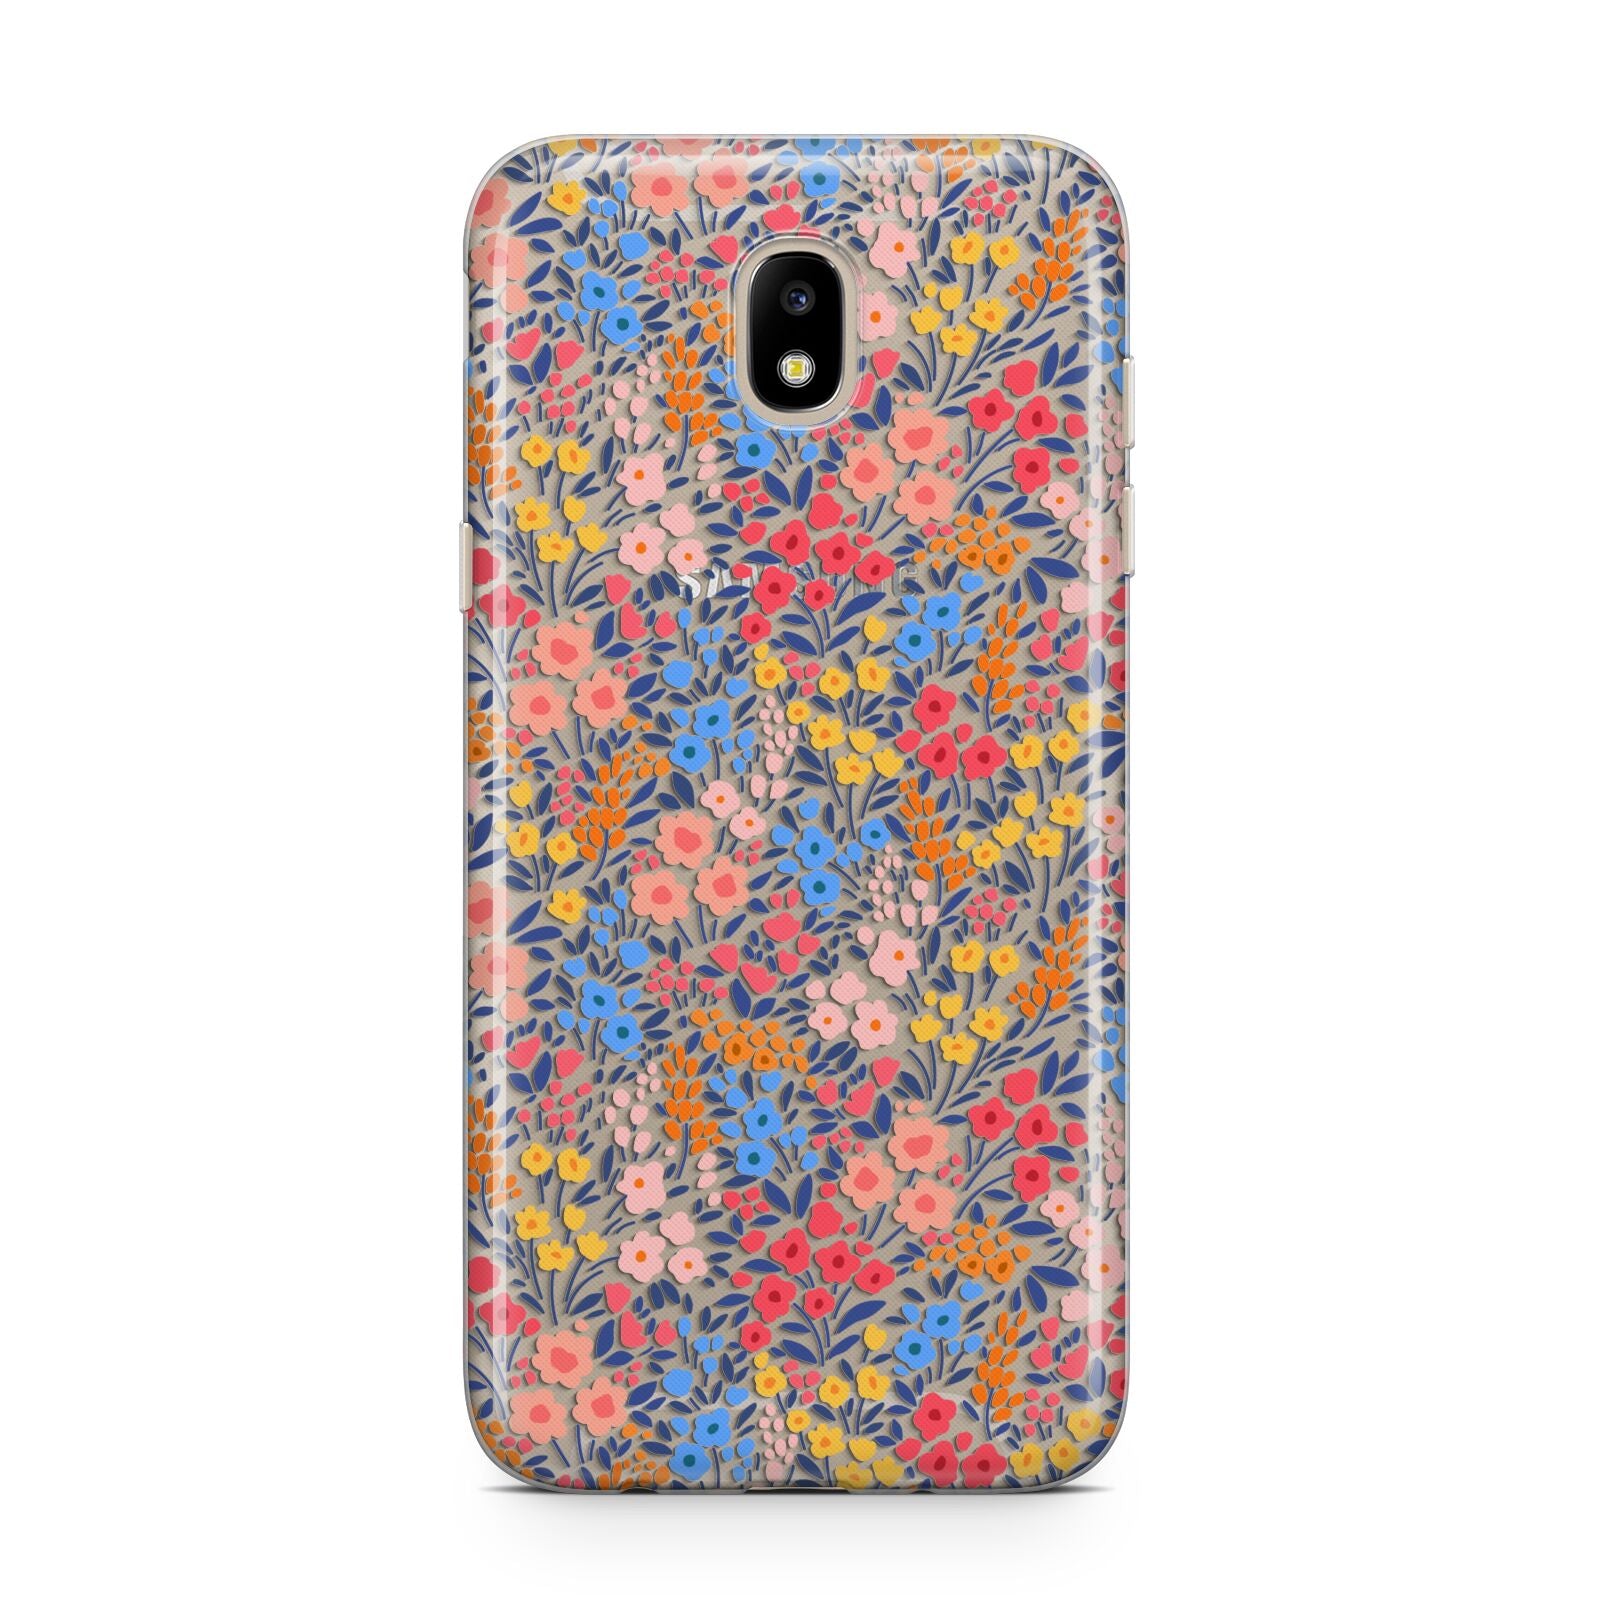 Small Flowers Samsung J5 2017 Case